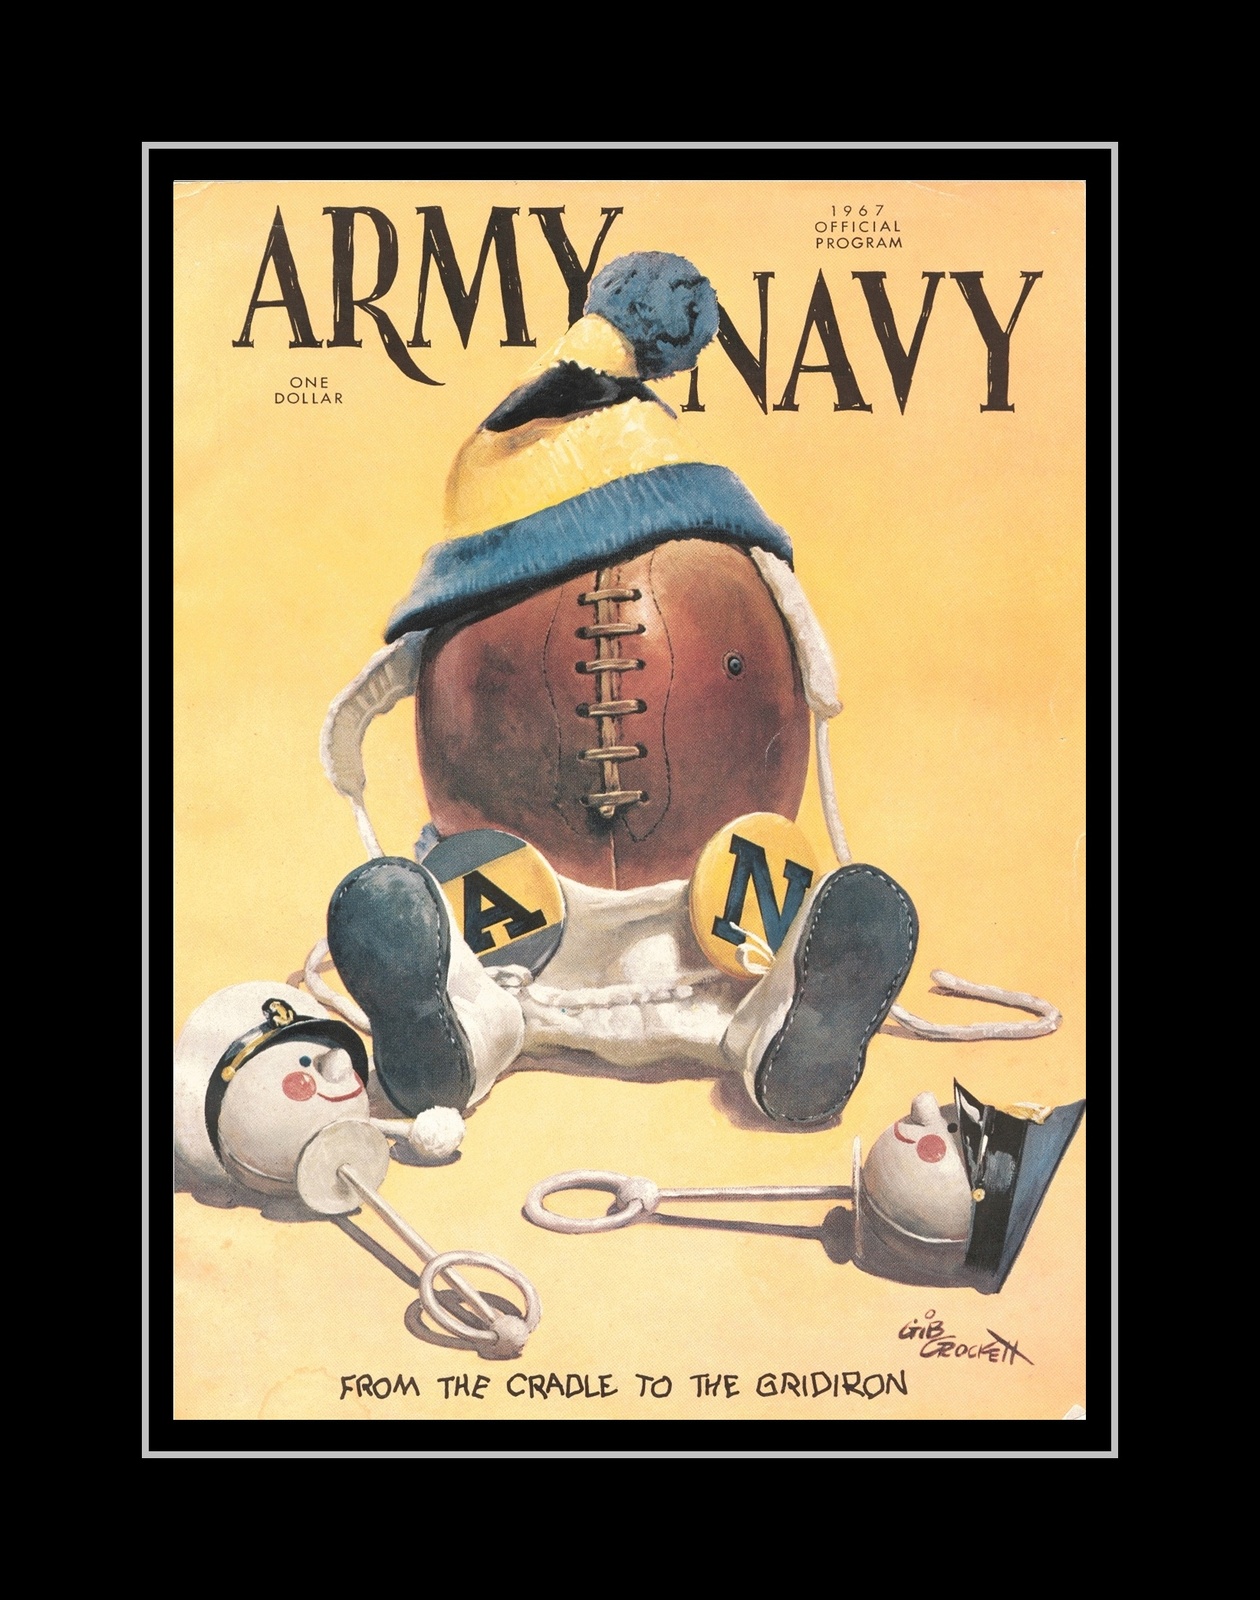 1967 Army Navy Football Program Poster Print, Military Reunion Wall Art Gift - $21.99 - $39.99